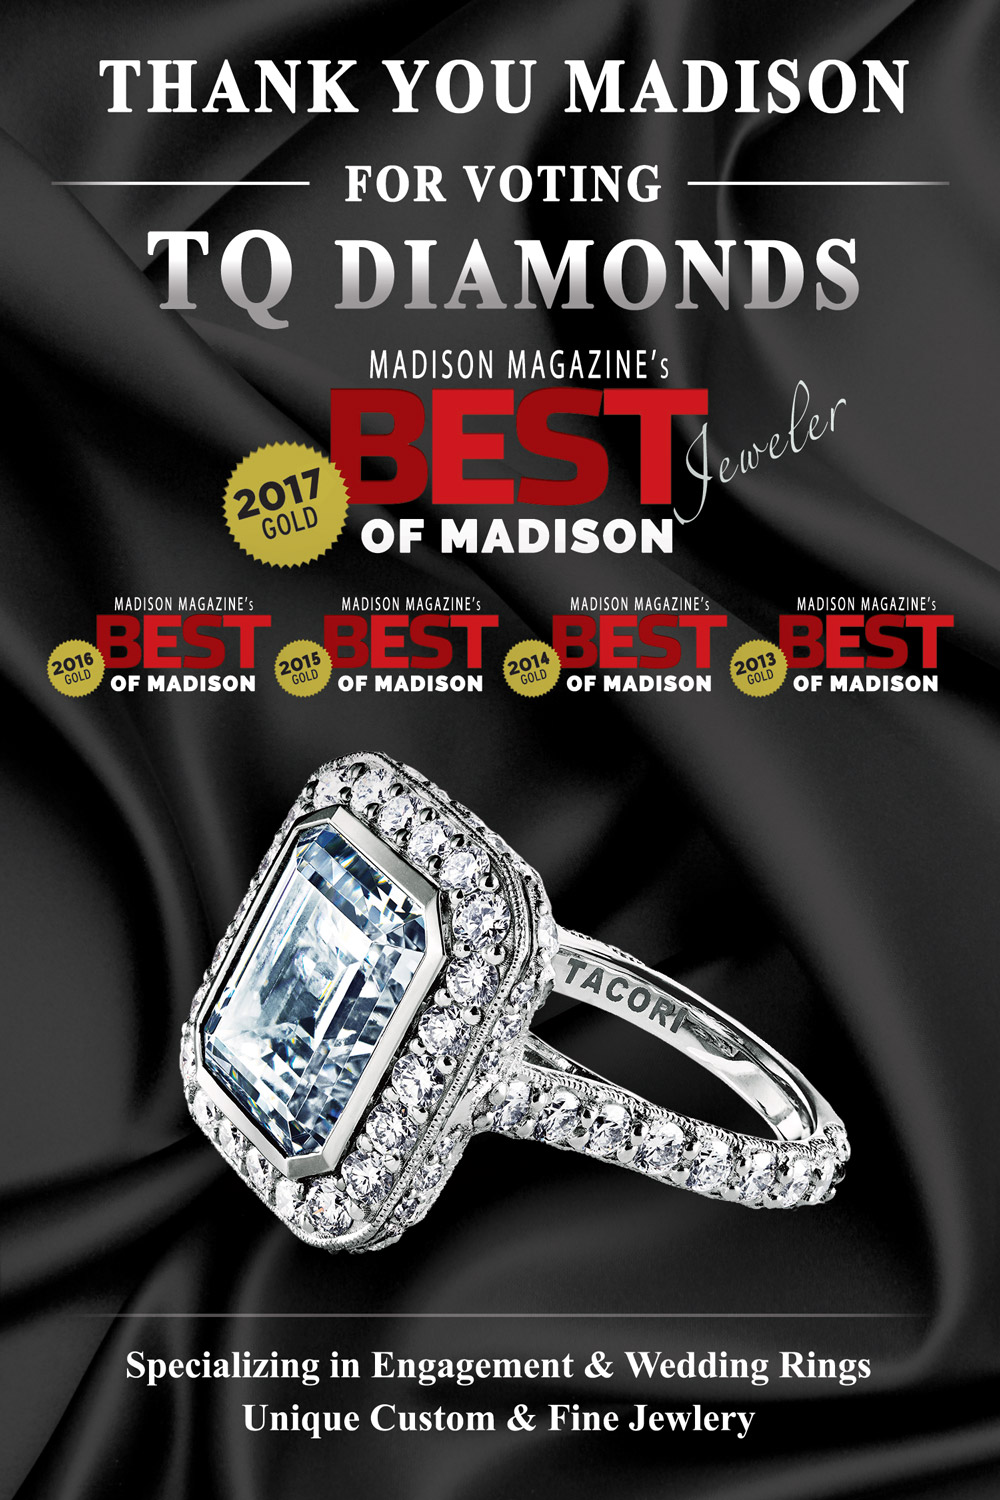 TQ Diamonds - Best Jeweler of Madison 2017